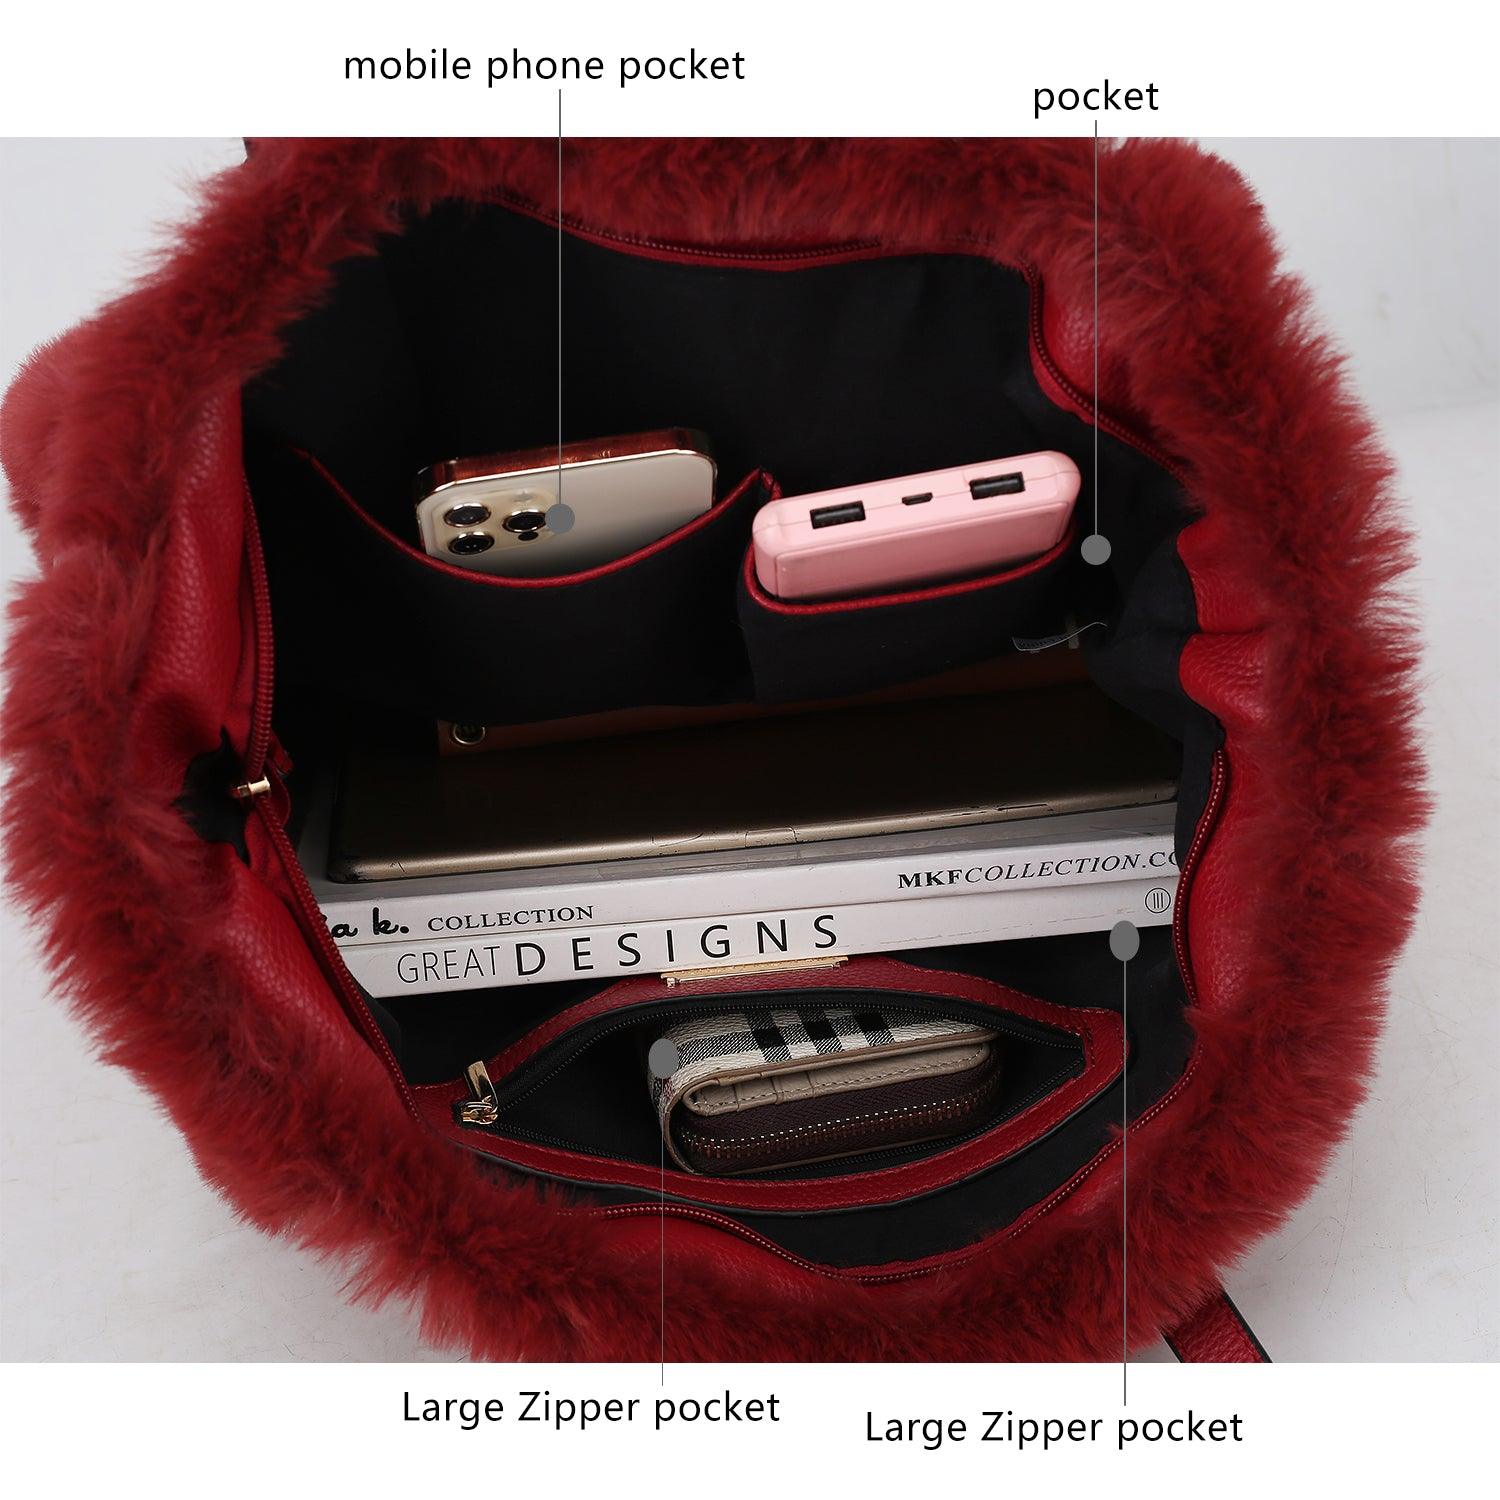 Wallets, Handbags & Accessories Liza Tote Handbag Vegan Leather With Faux Fur Women